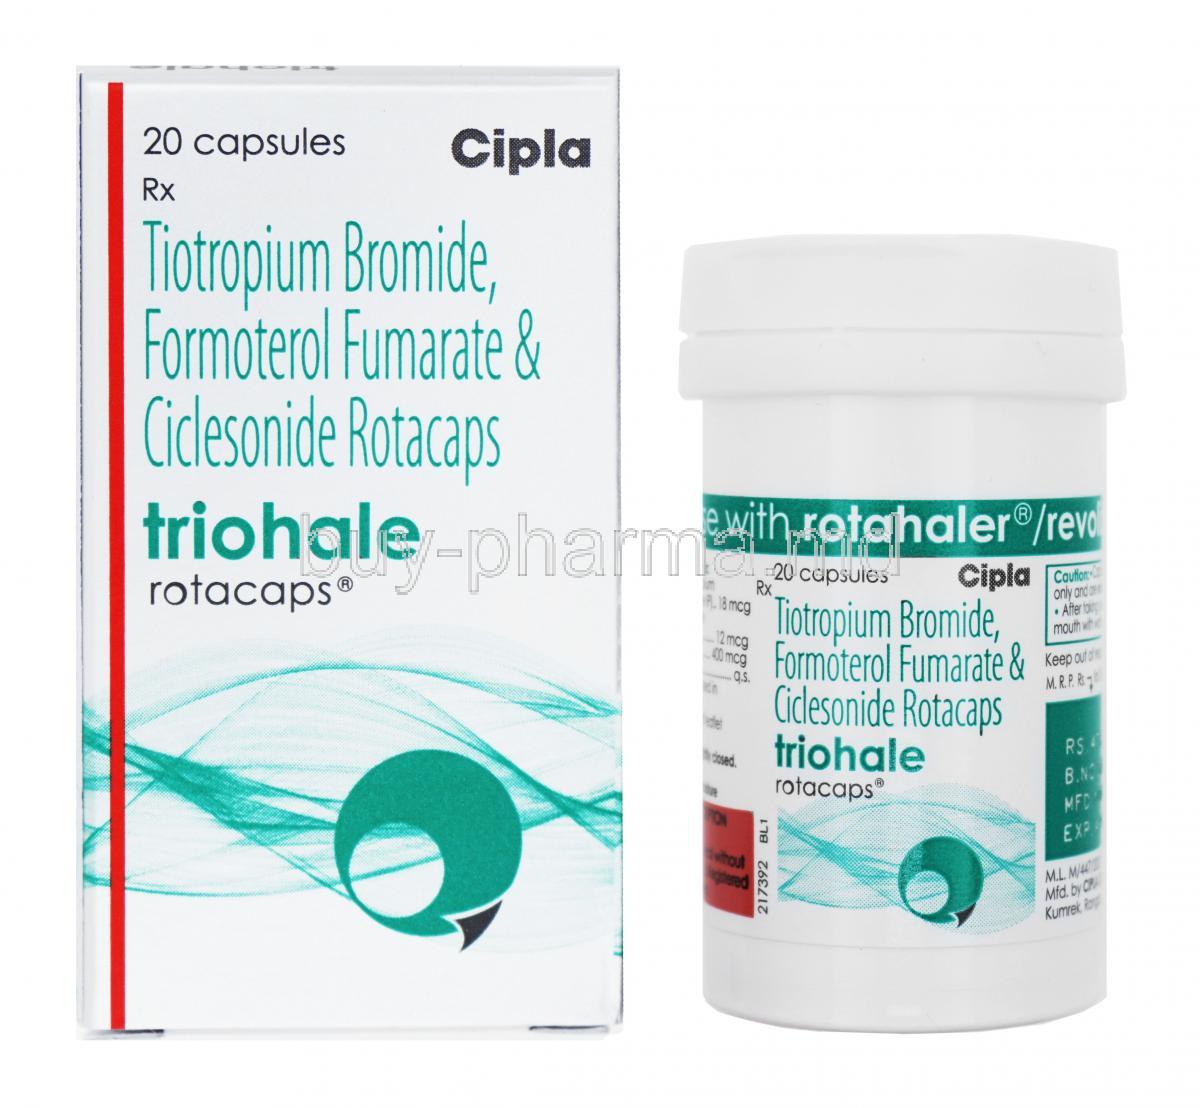 Triohale Rotacap, Ciclesonide, Formoterol and Tiotropium box